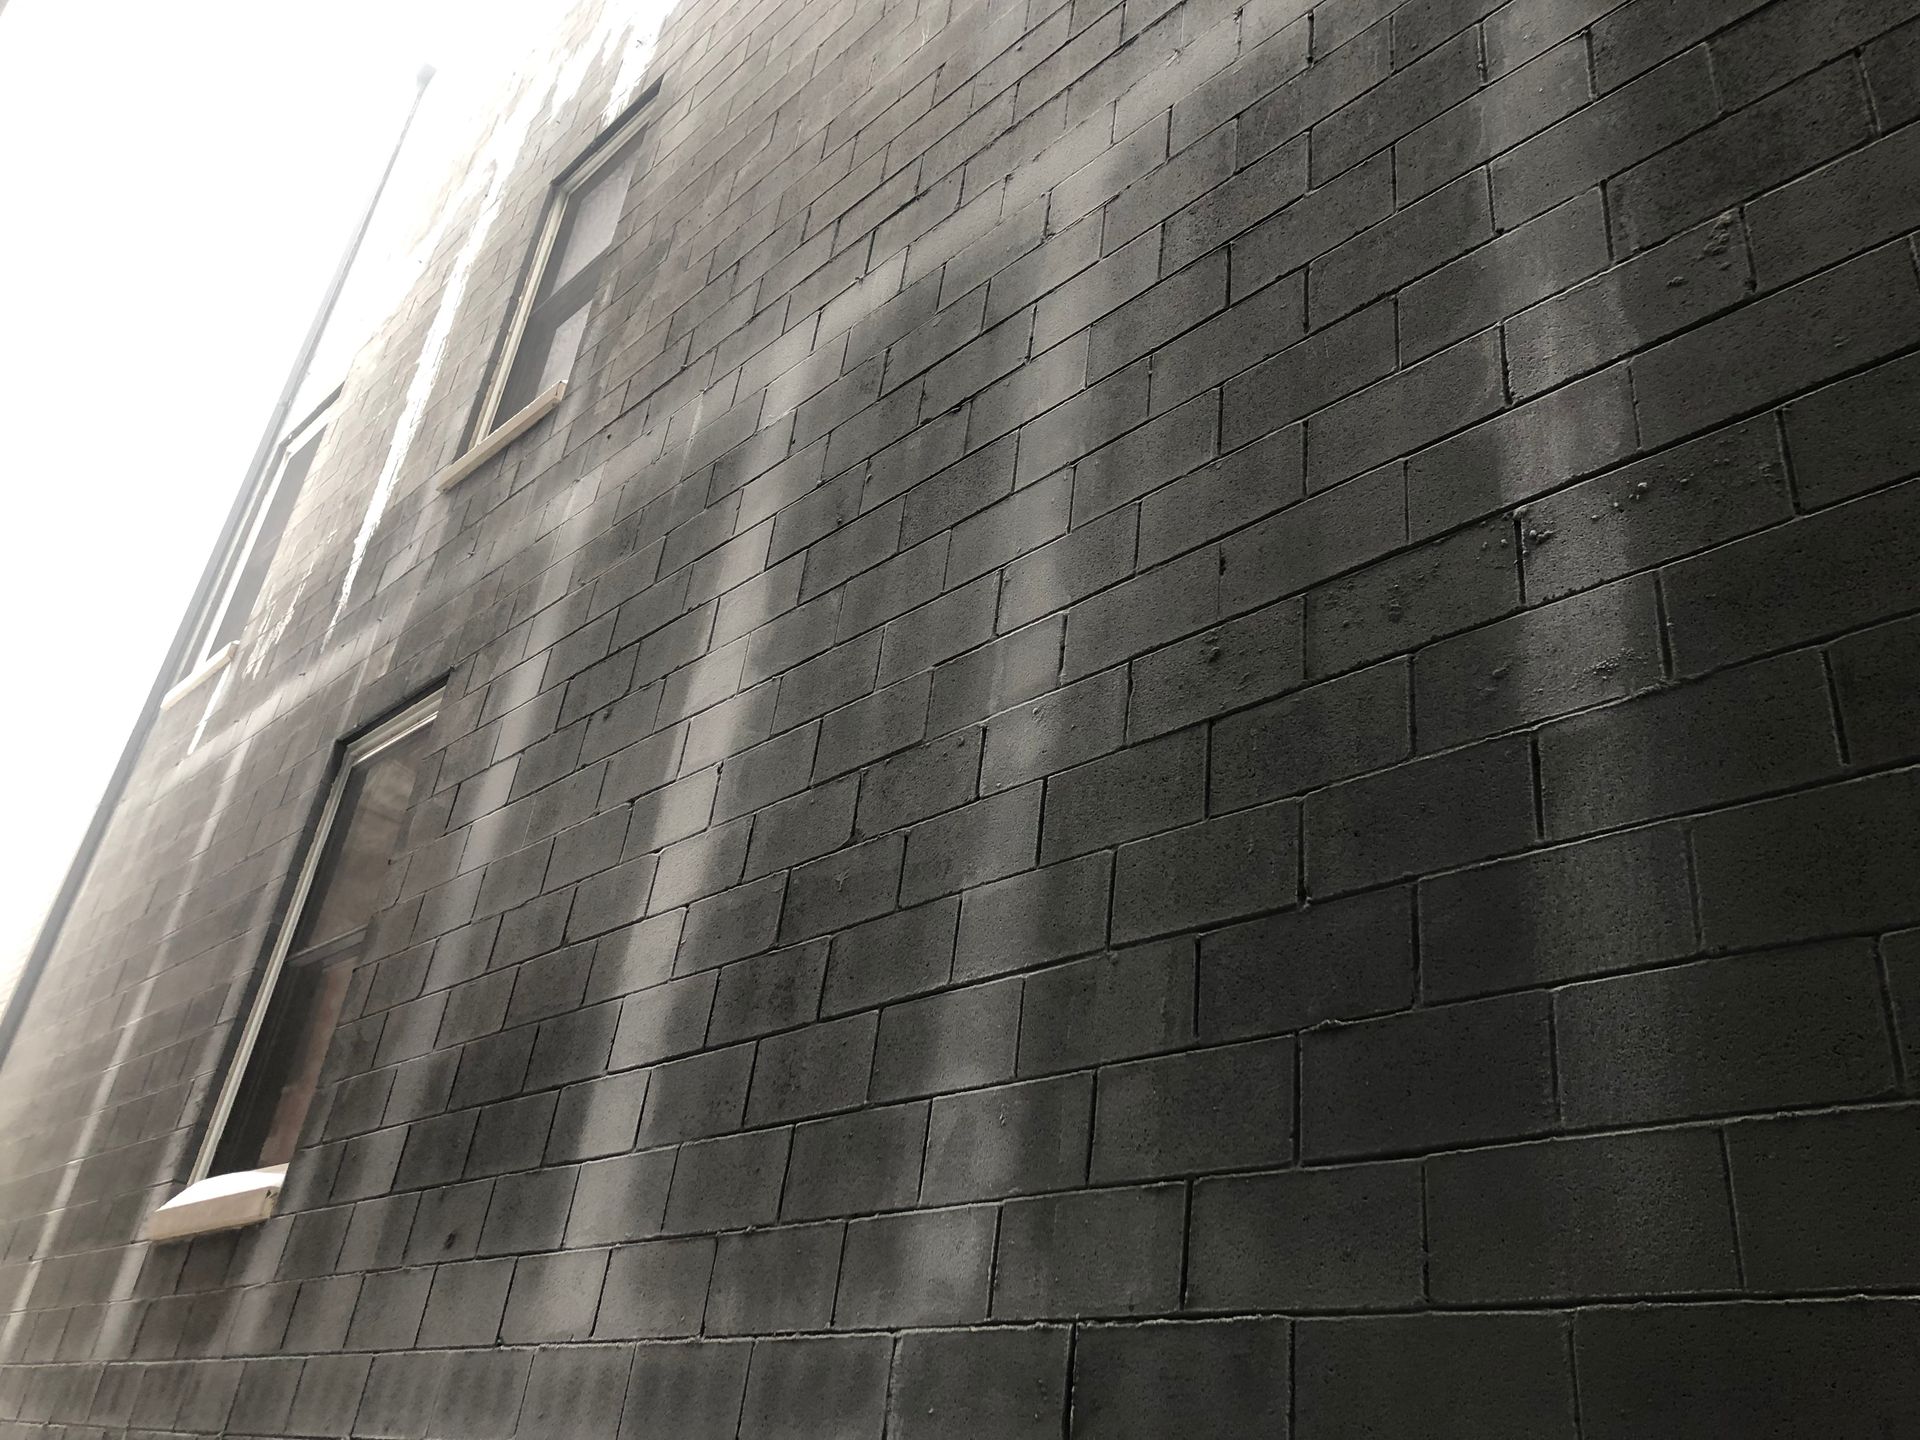 Concrete block building with dark gray elastomeric coating show water frozen in block cores, Little Village, Chicago, IL 